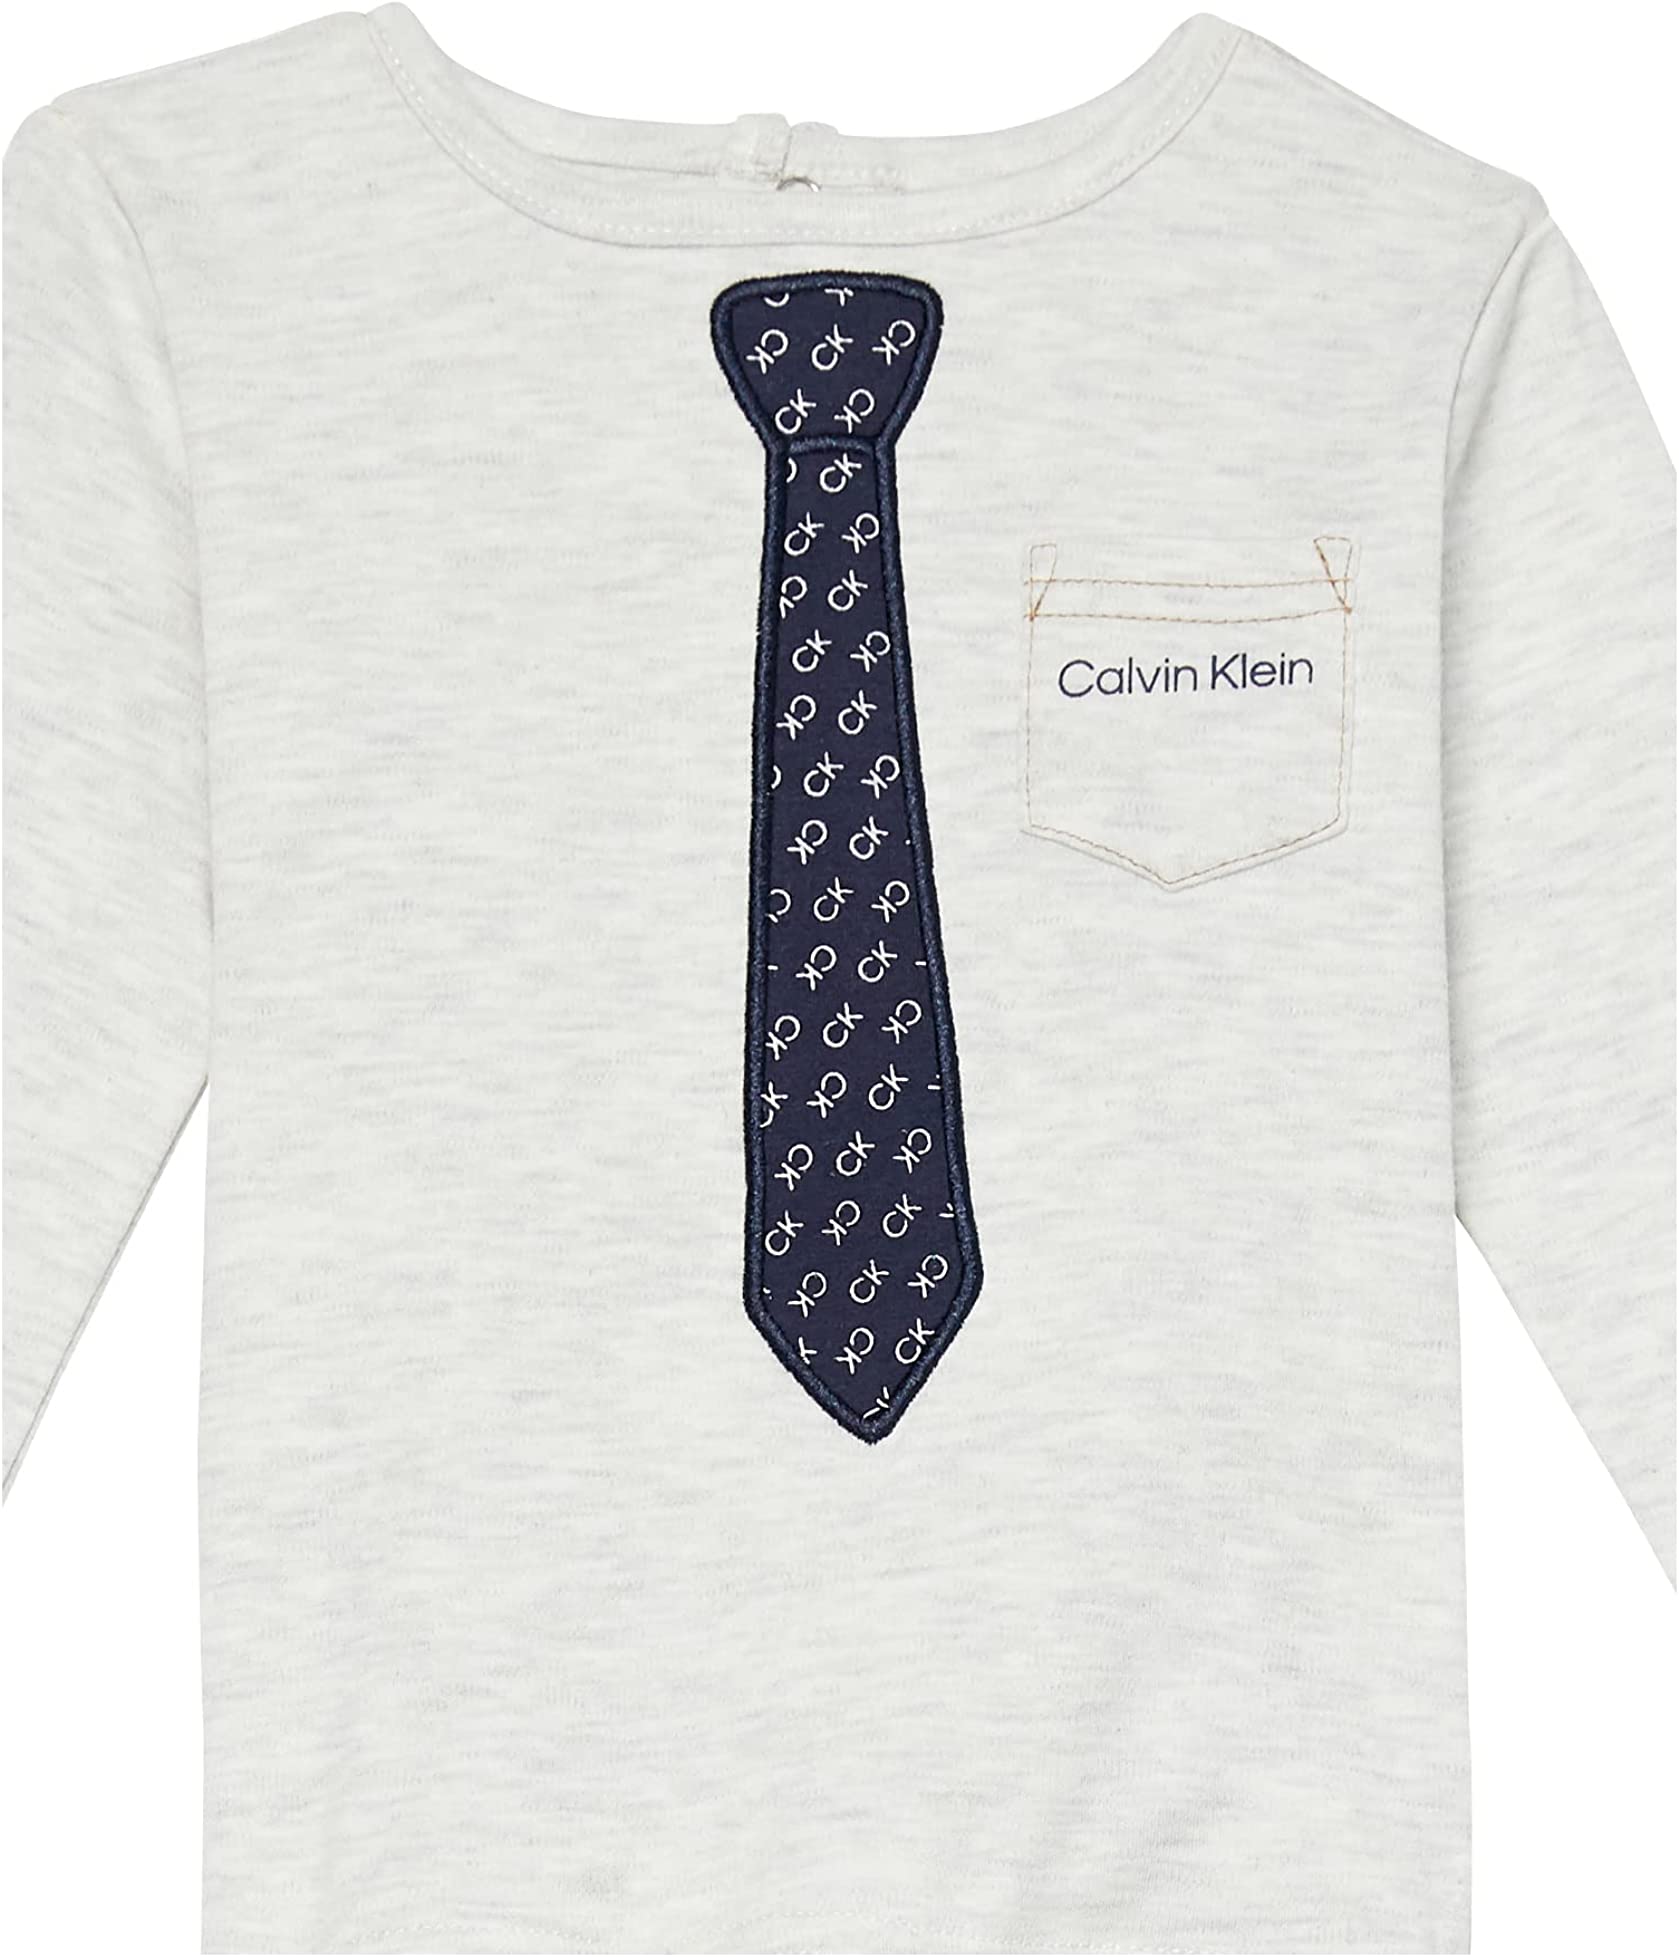 Calvin Klein Boys 12-24 Months 2-Piece Tie Shirt and Pant Set